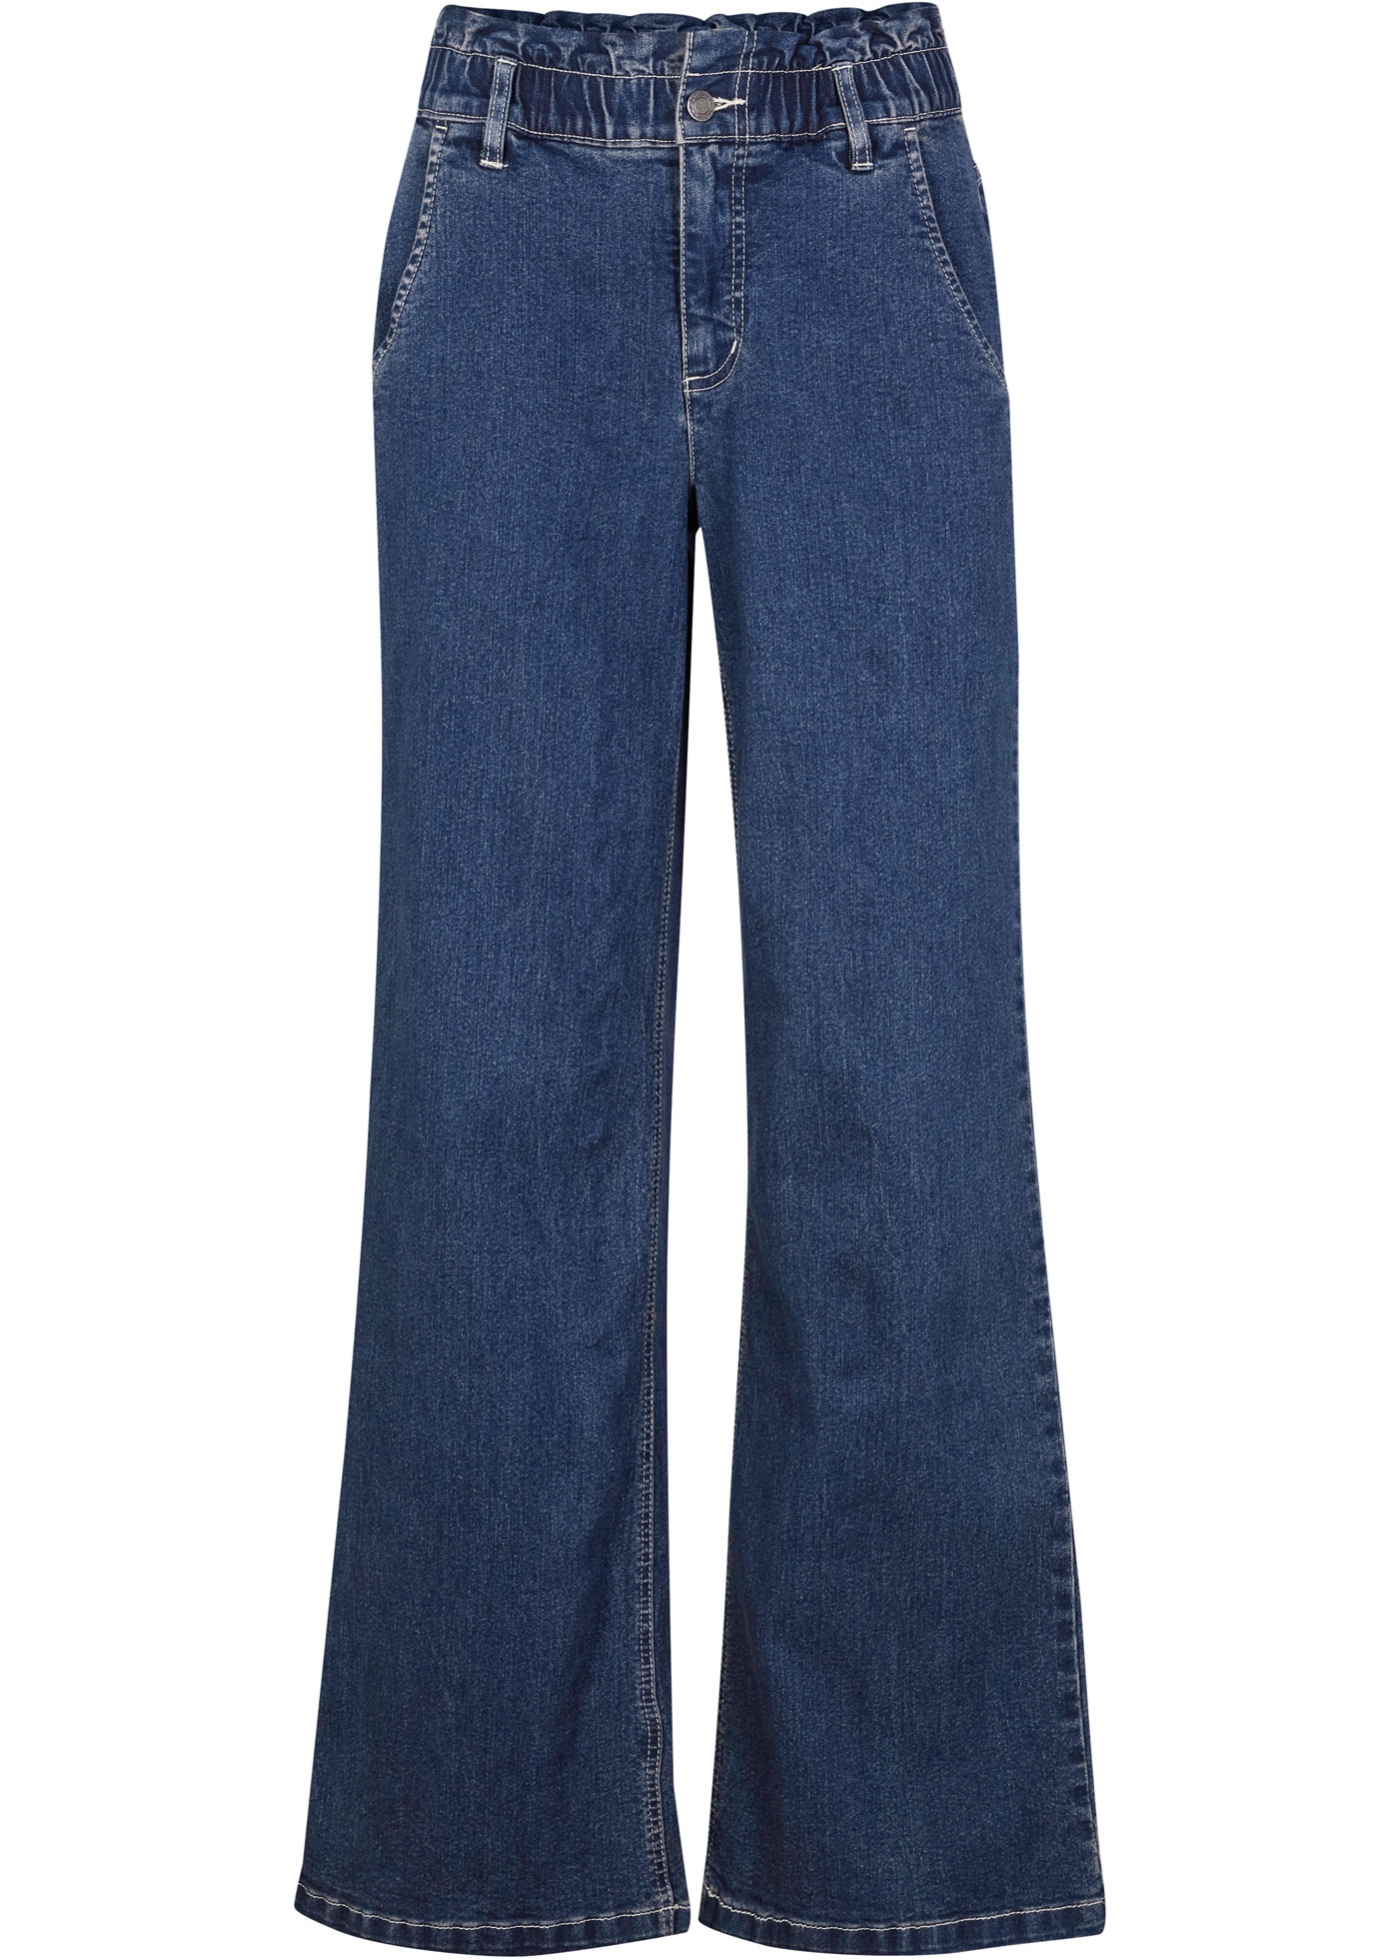 Modische Paper-Bag Jeans mit Stretch (94545795) in dunkelblau denim